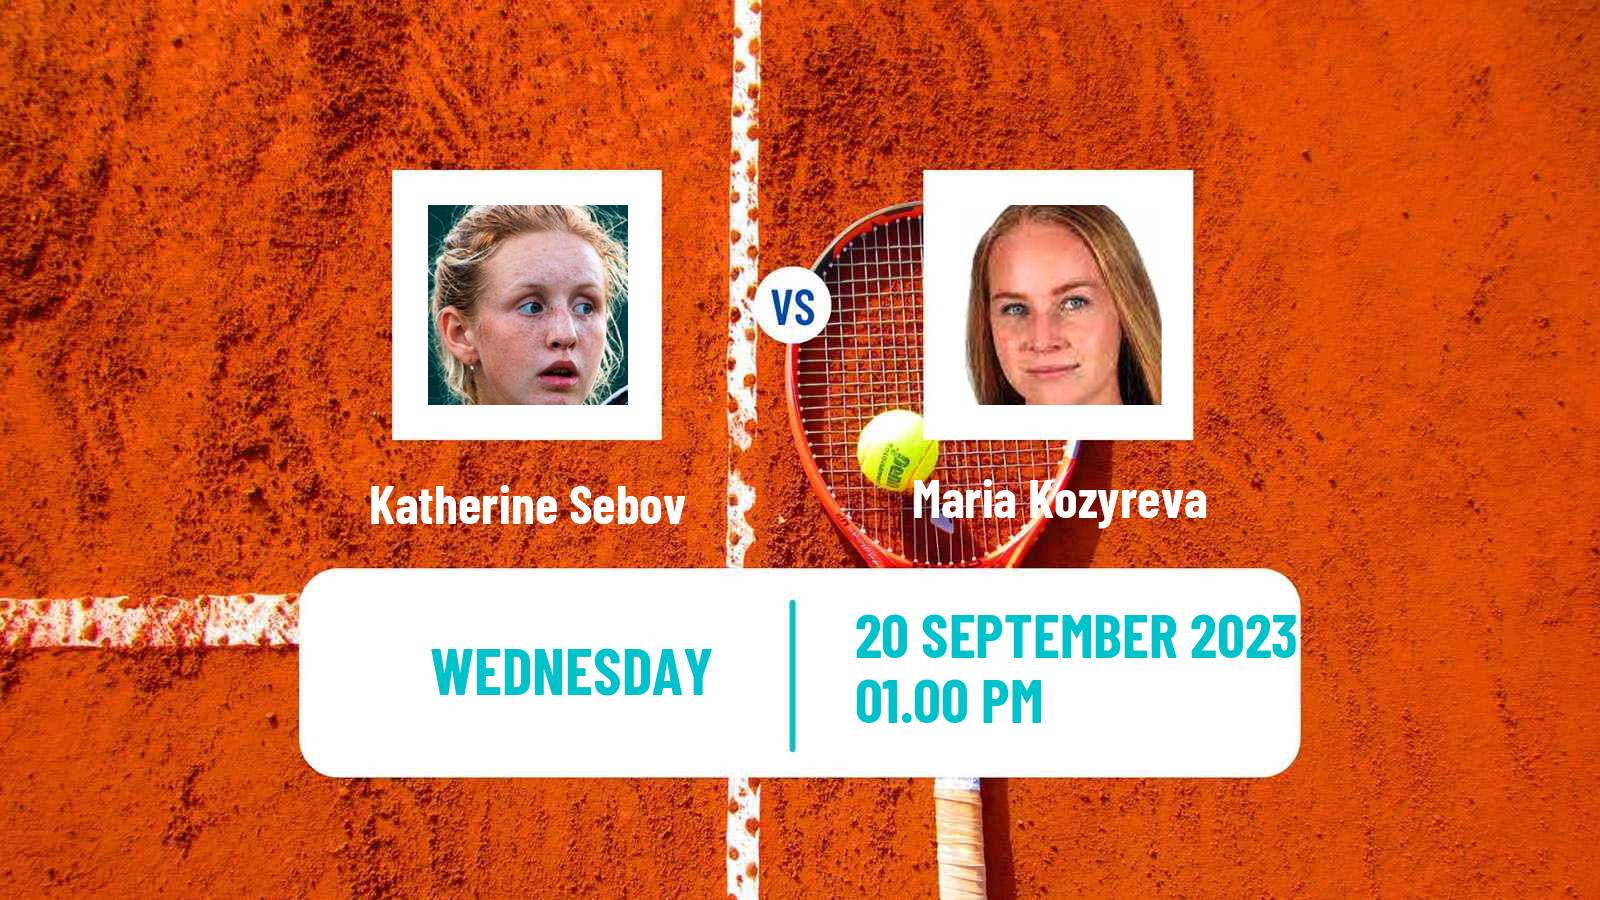 Tennis ITF W60 Berkeley Ca Women Katherine Sebov - Maria Kozyreva